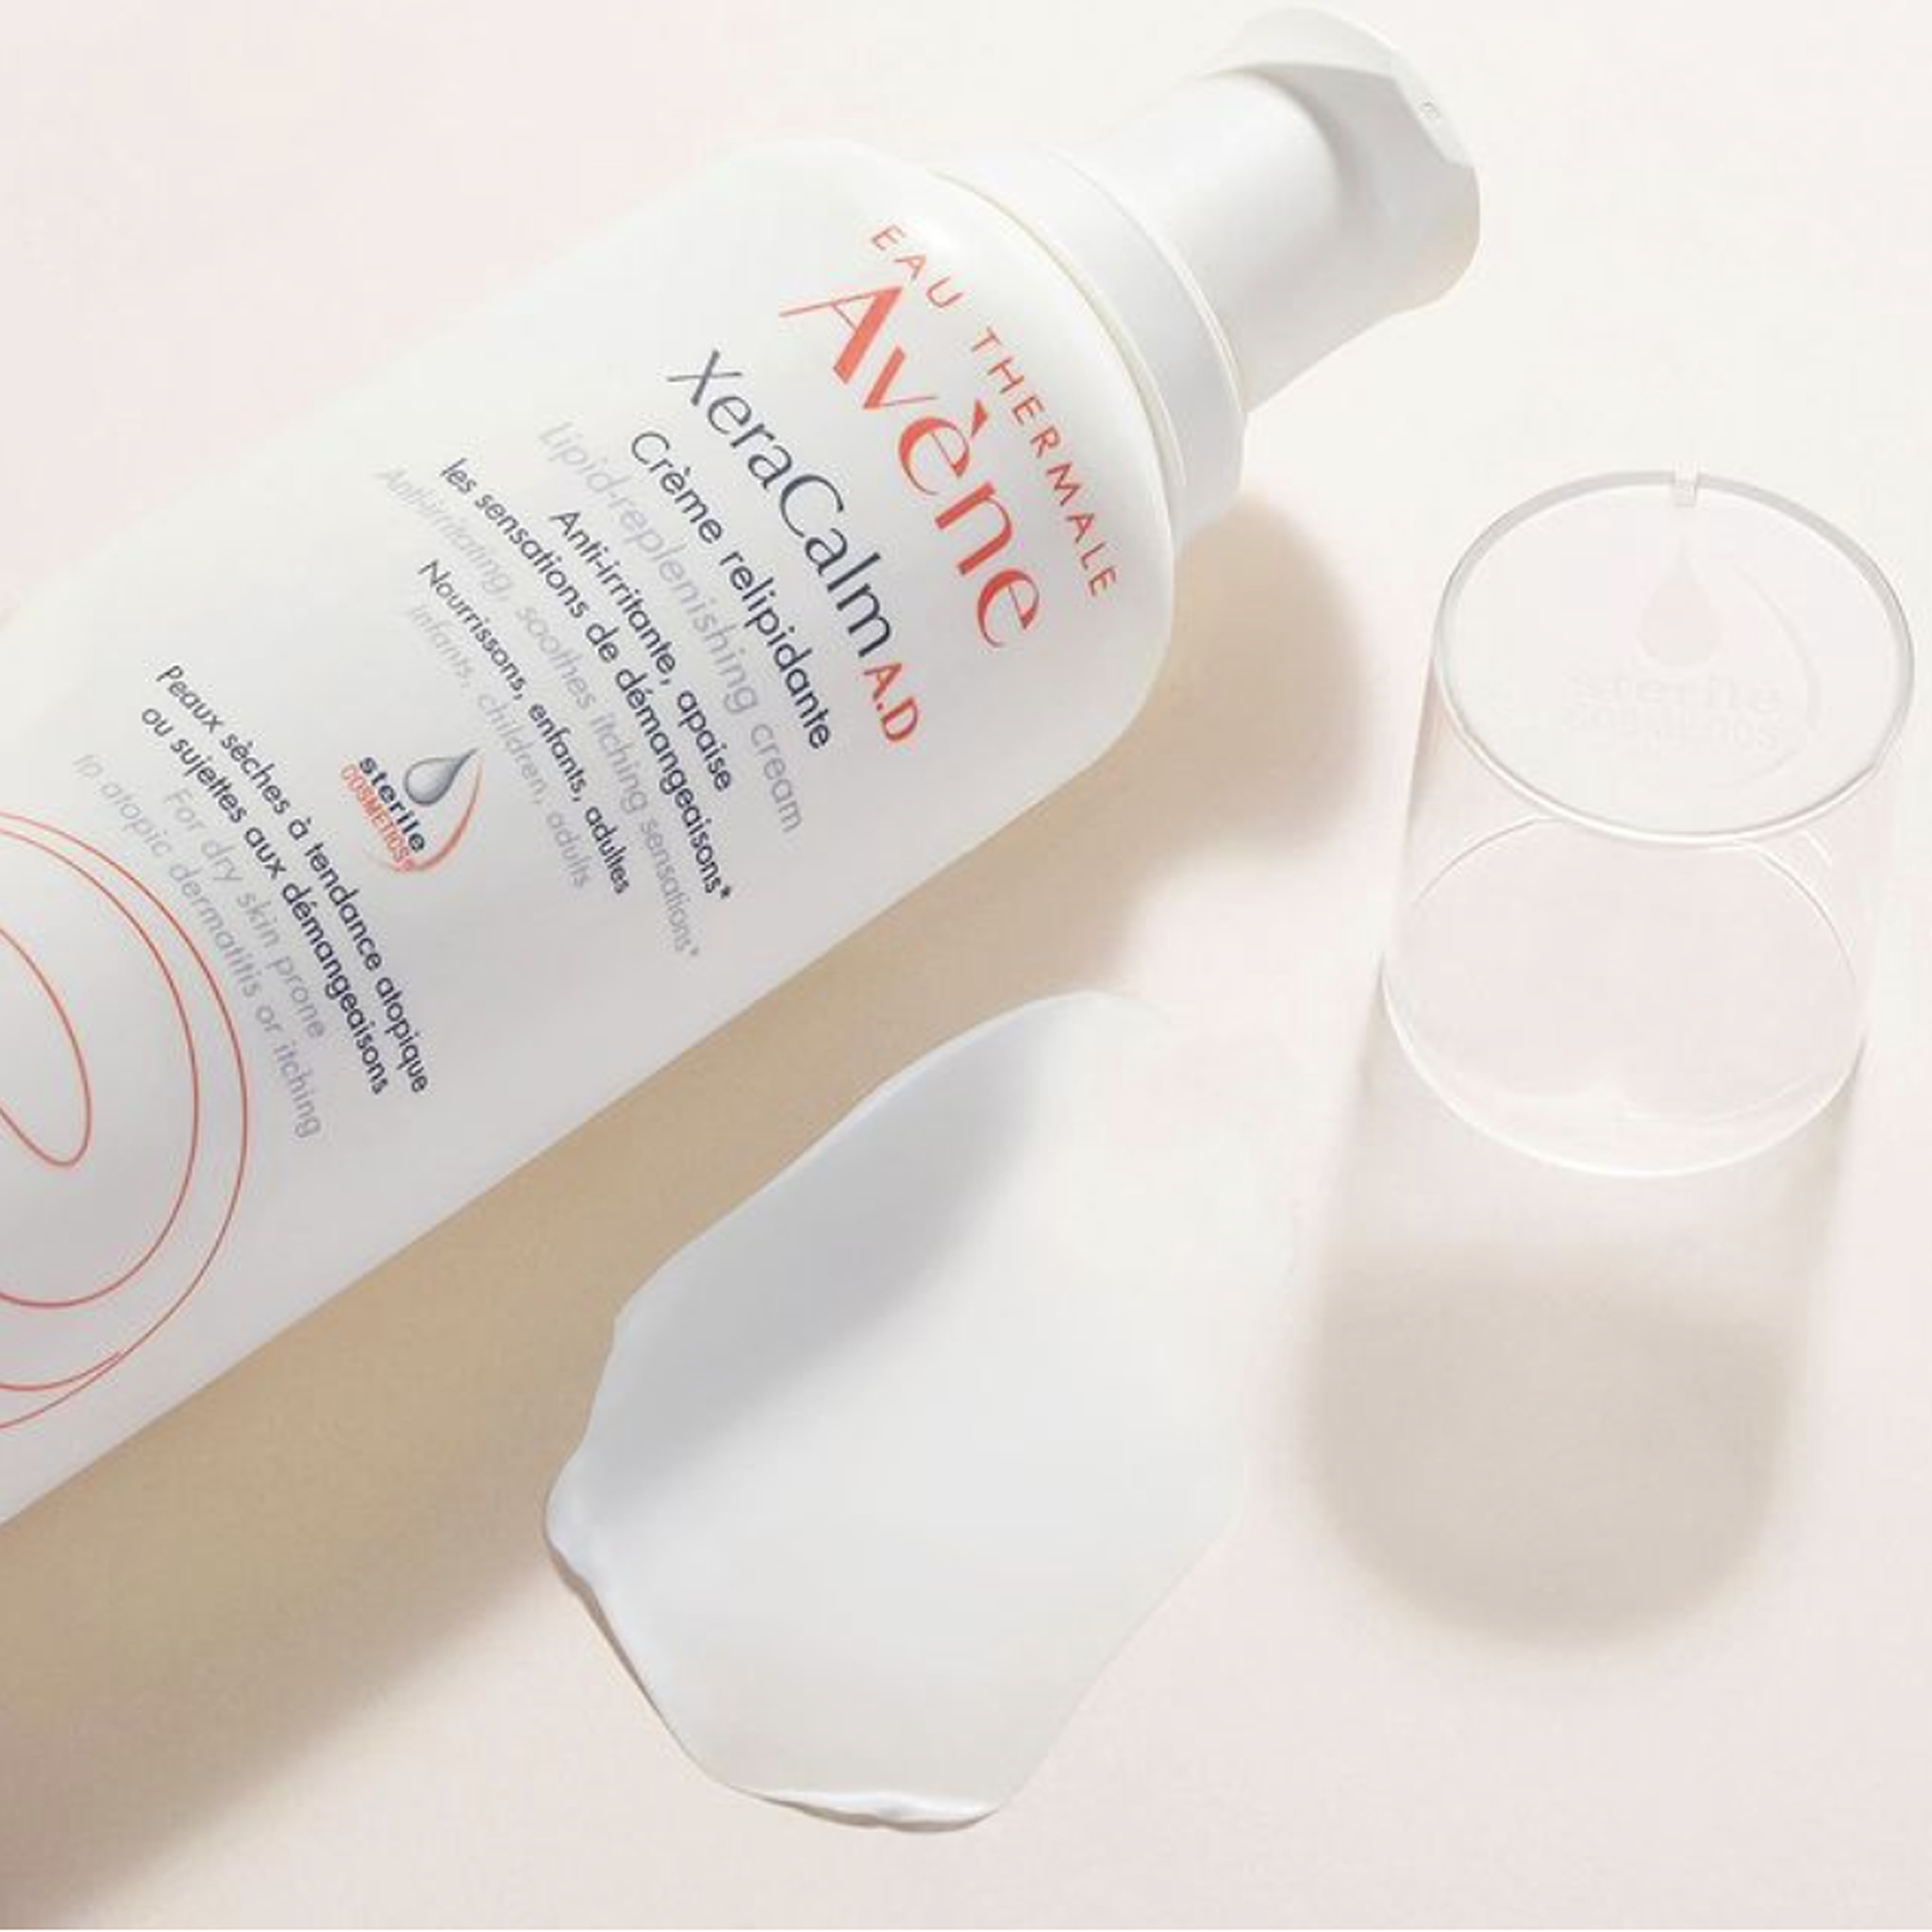 Avène XeraCalm A.D Lipid-Replenishing Cream 400ml - Moisturiser for Eczema-prone Skin